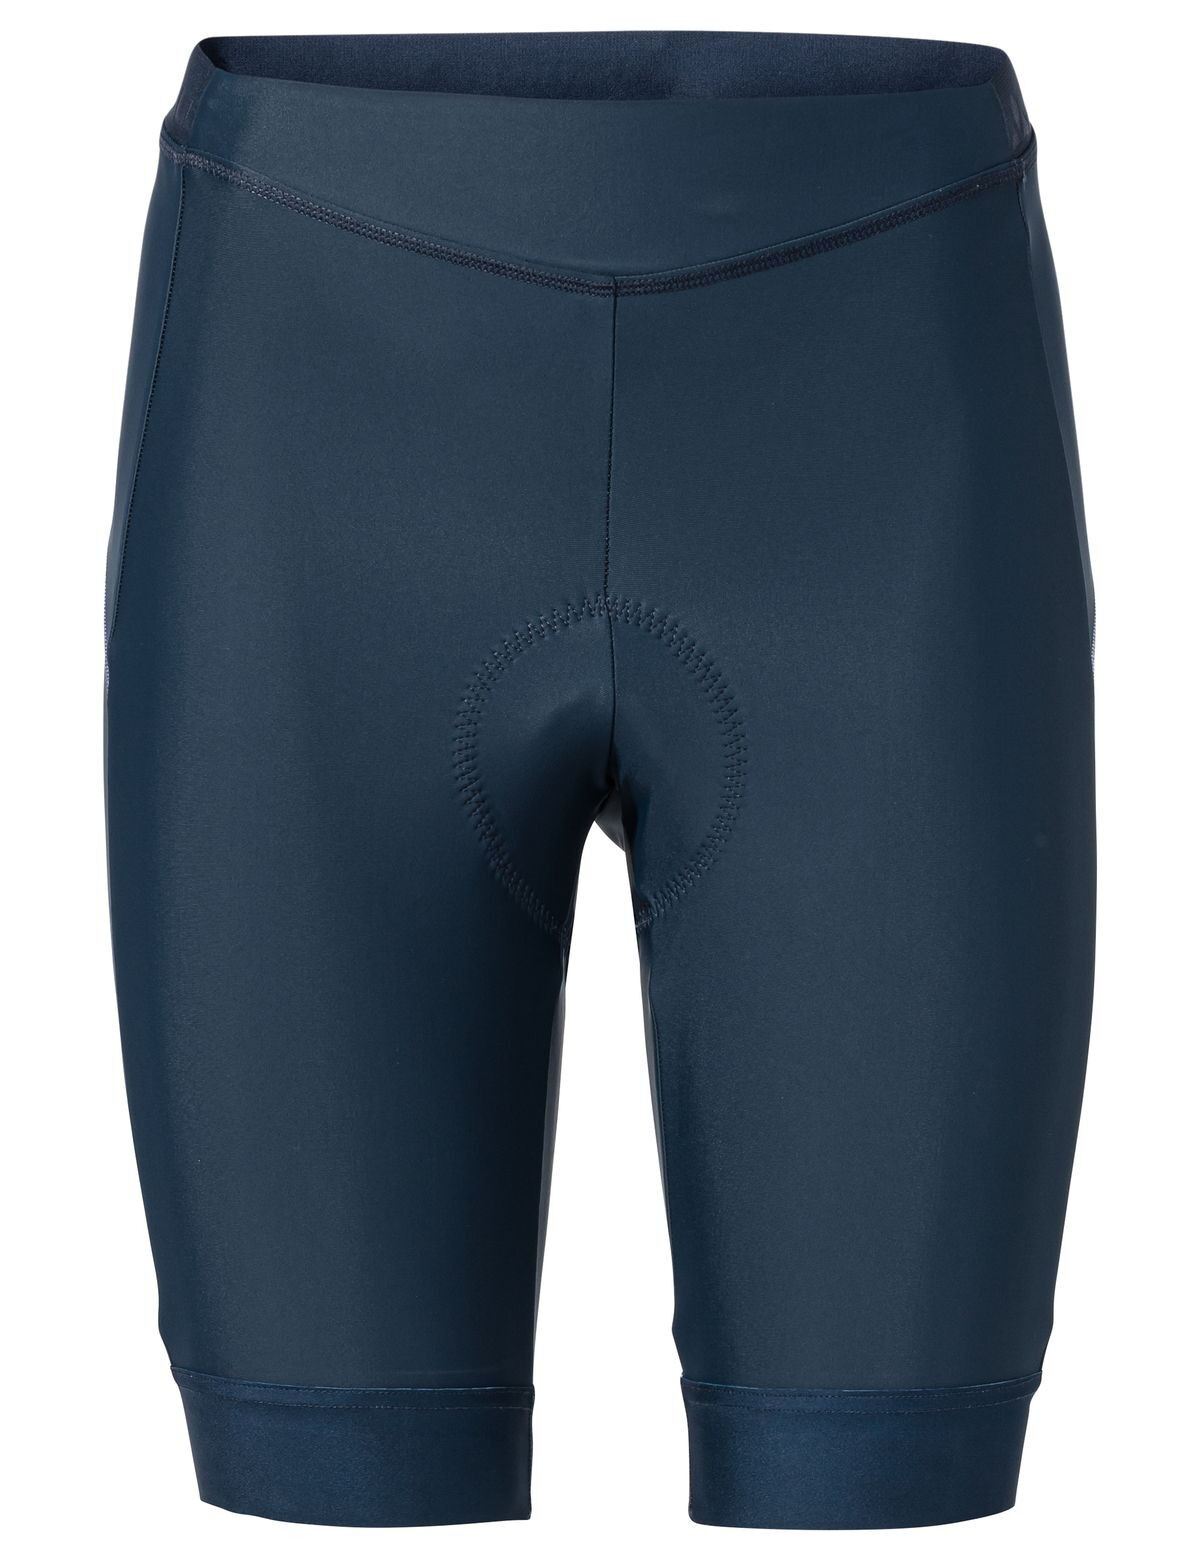 Vaude Advanced Pants IV - Cycling shorts - Women's